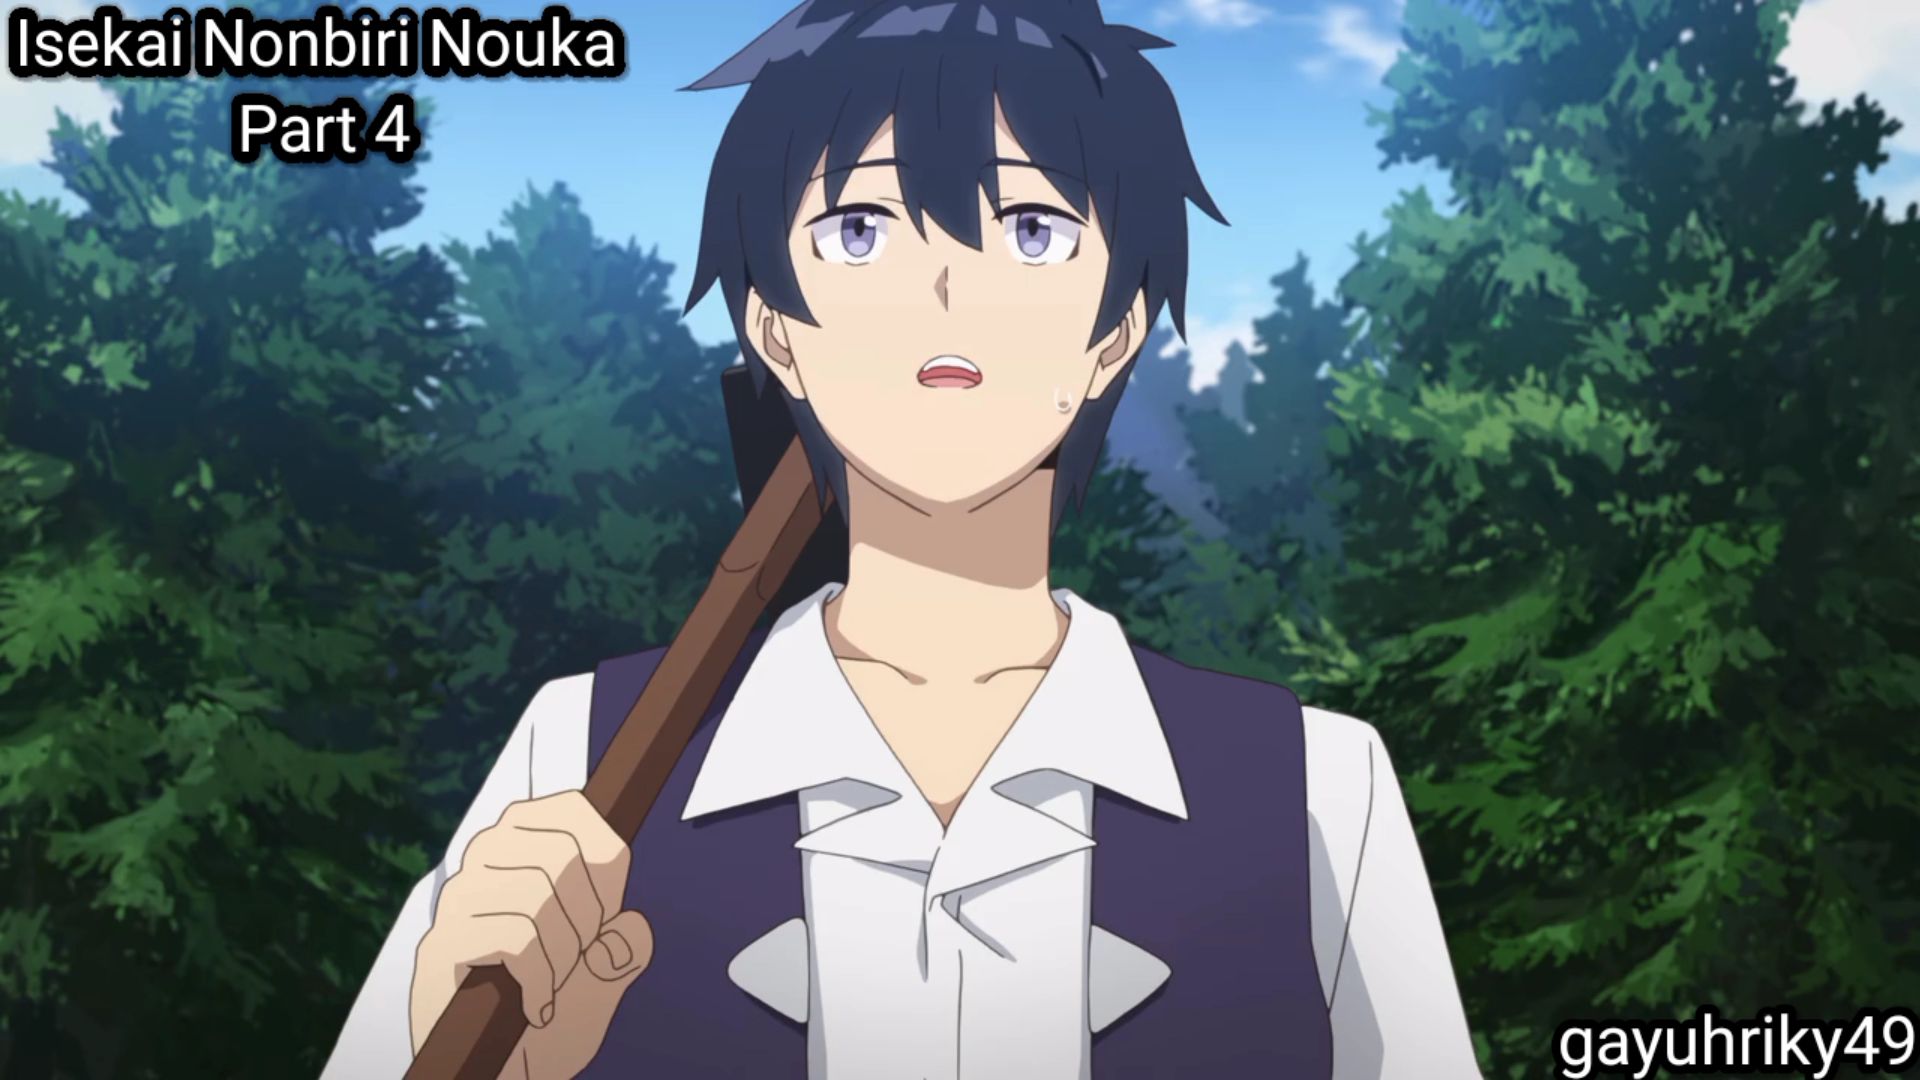 SockedPassion on X: Isekai Nonbiri Nouka Episode 4. Wow! That